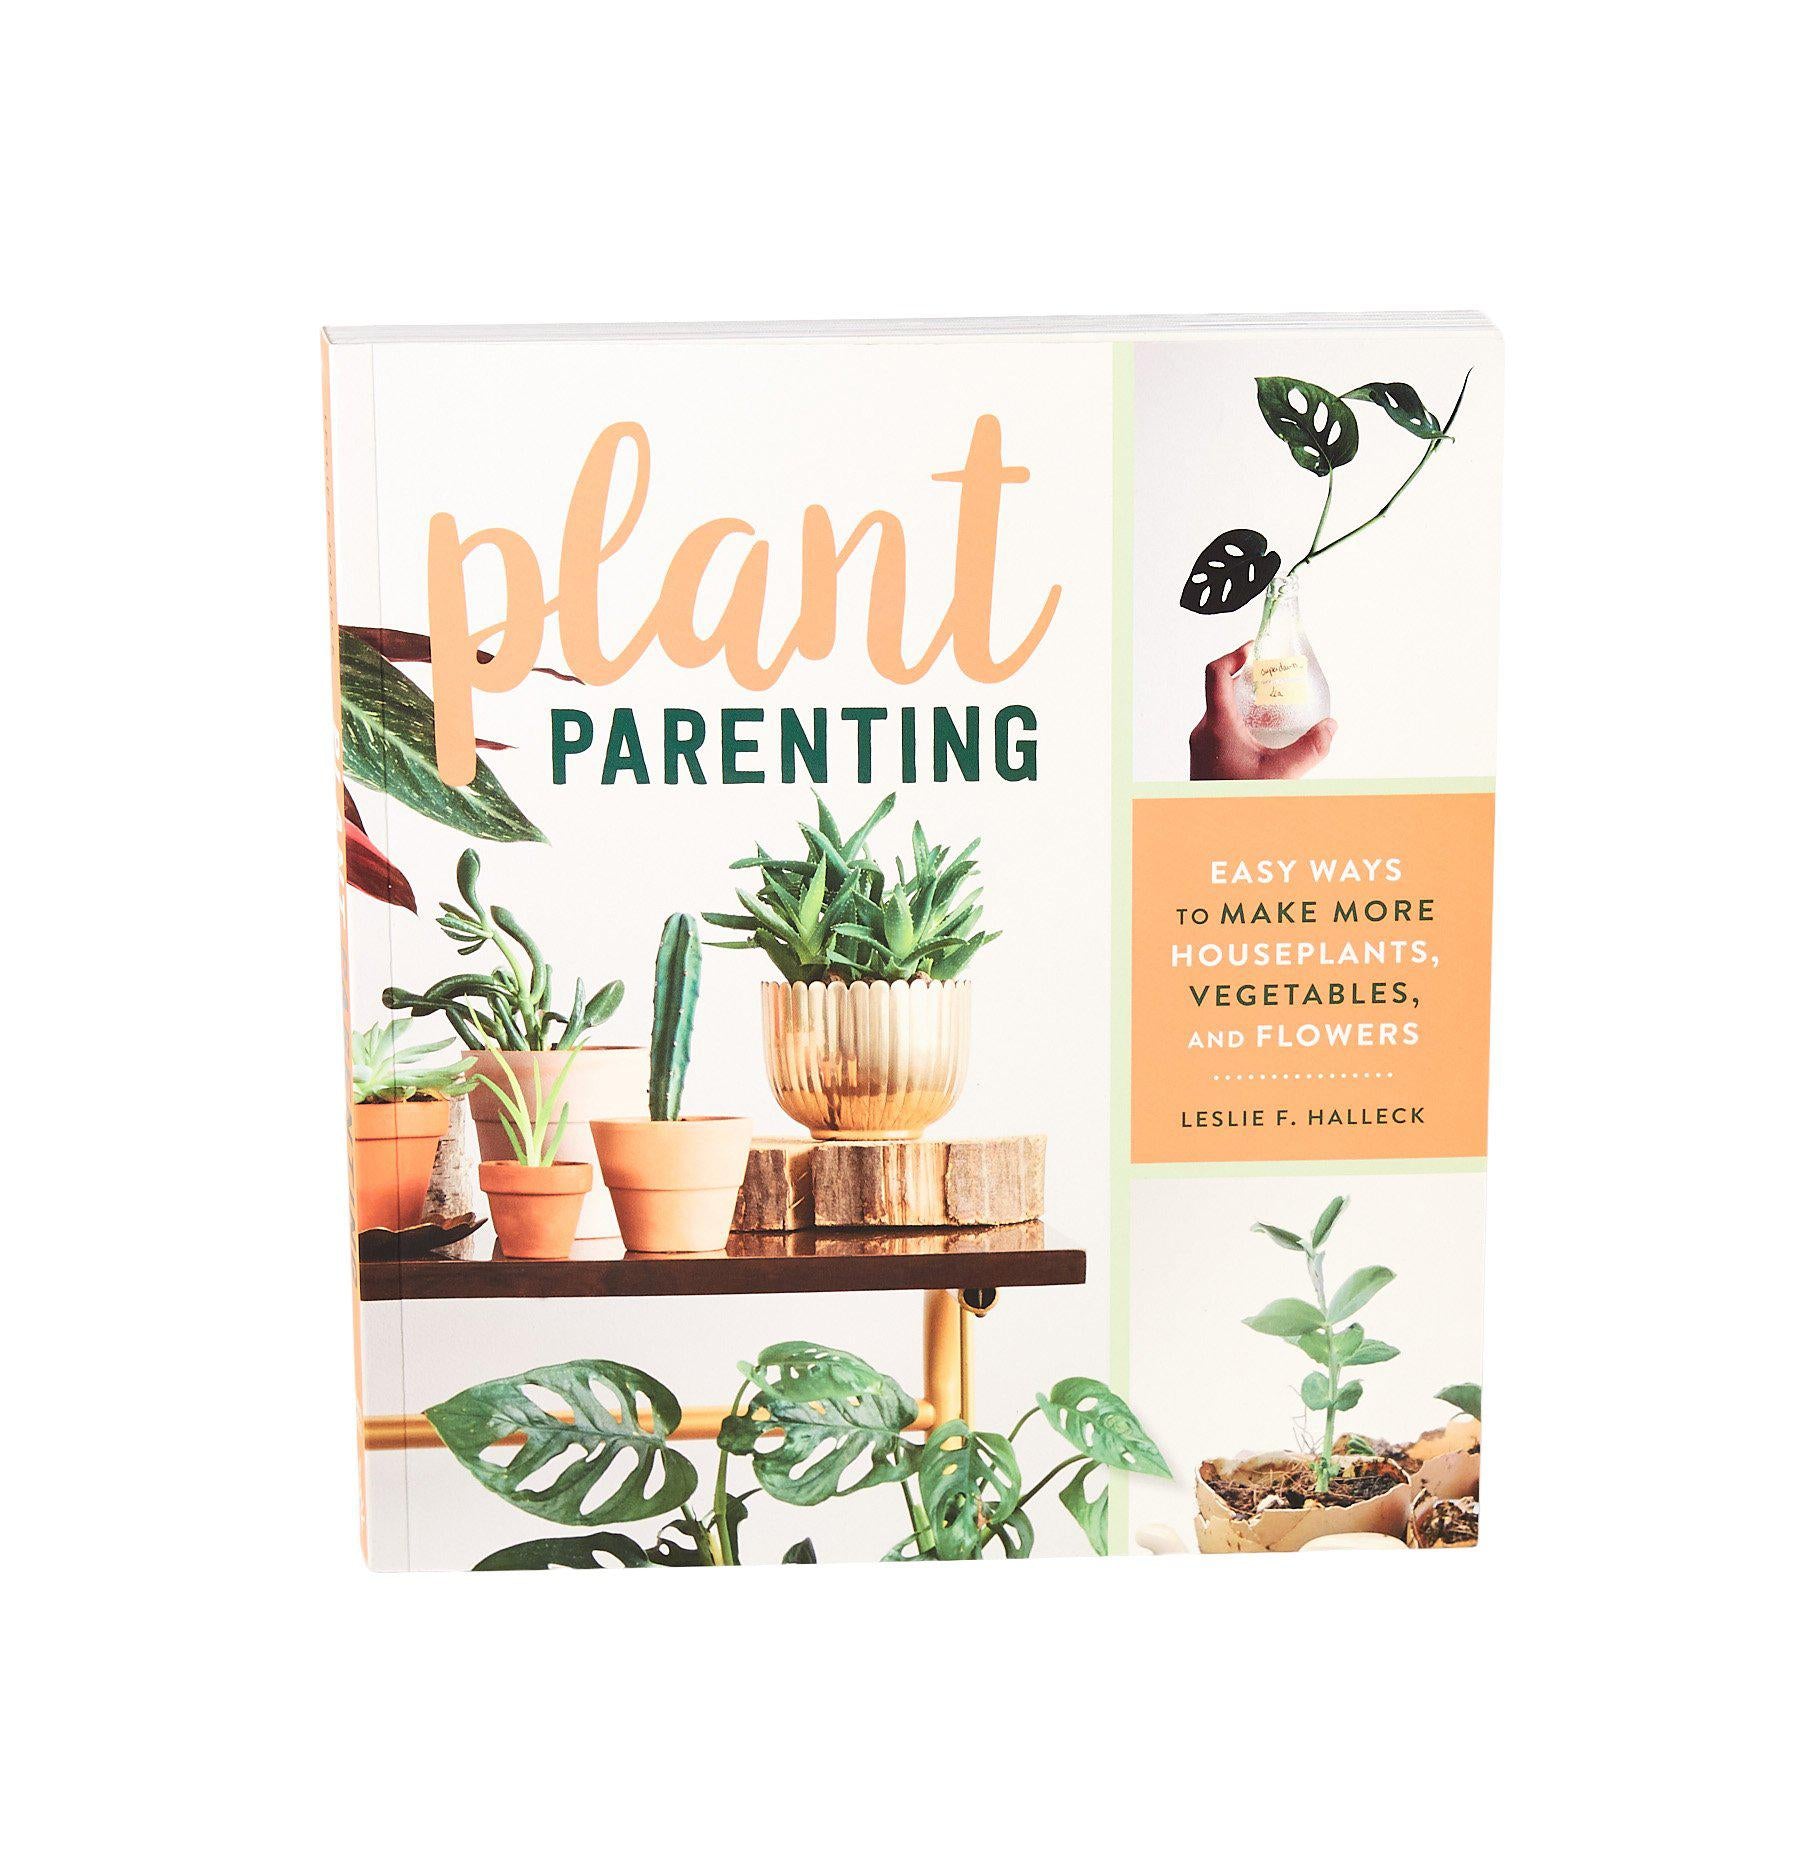 Best plant parenting book.